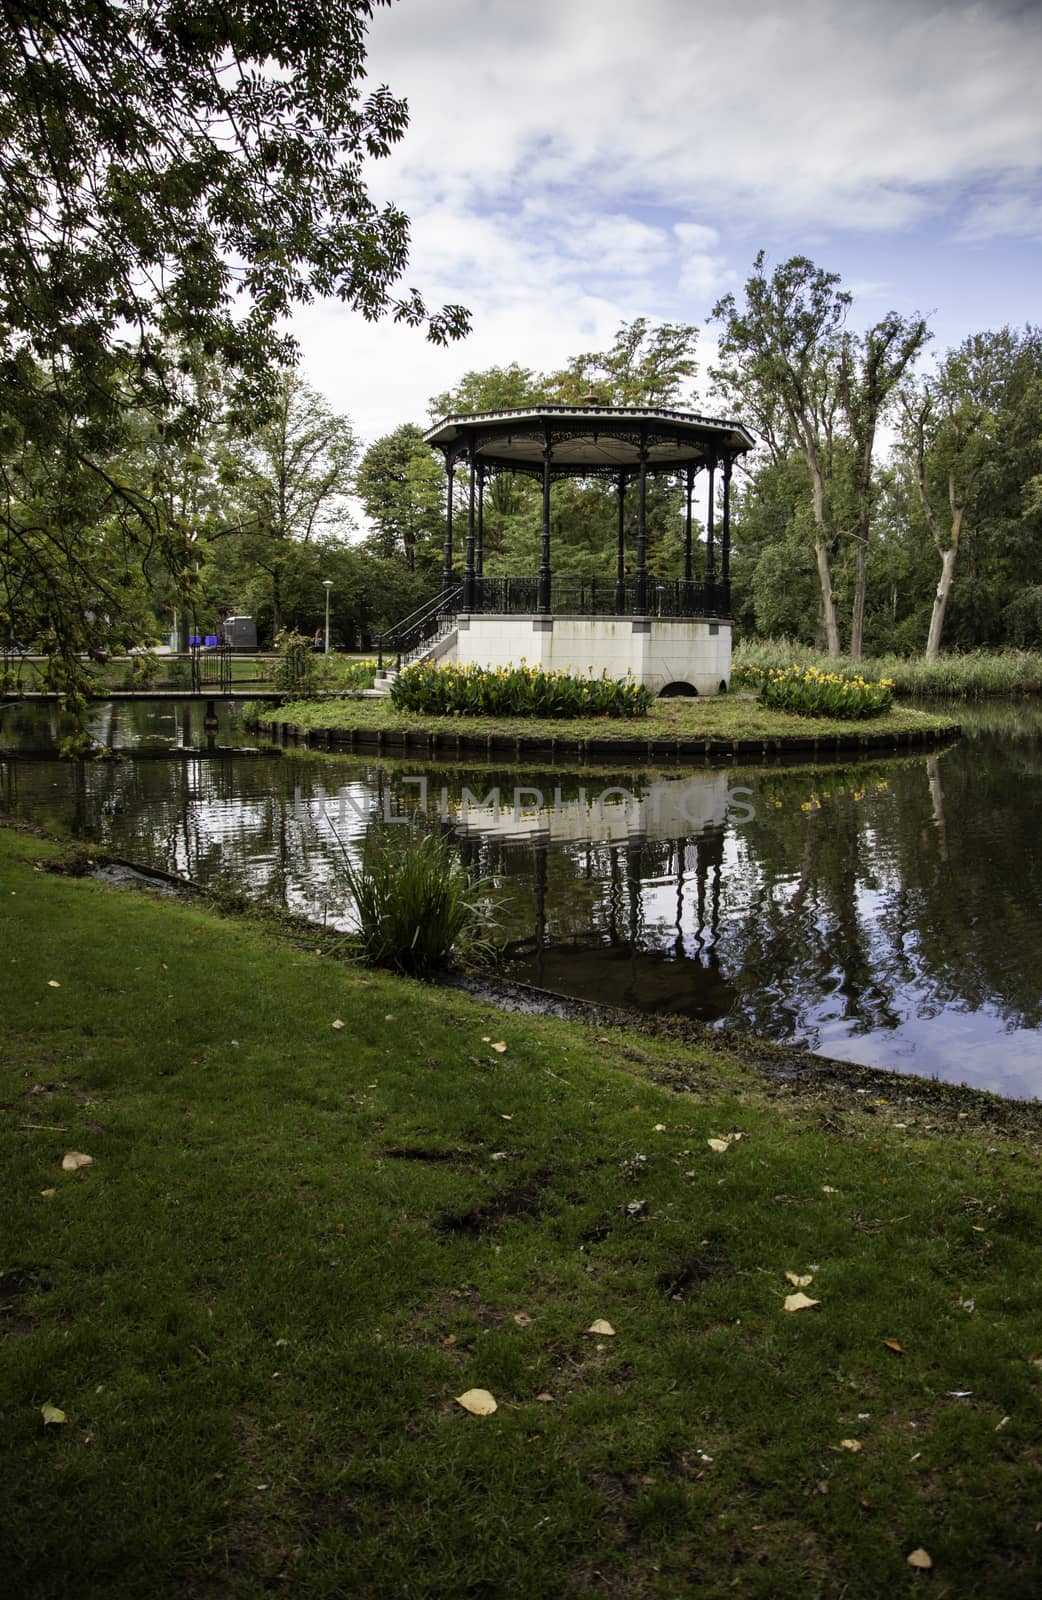 Park in amsterdam by esebene